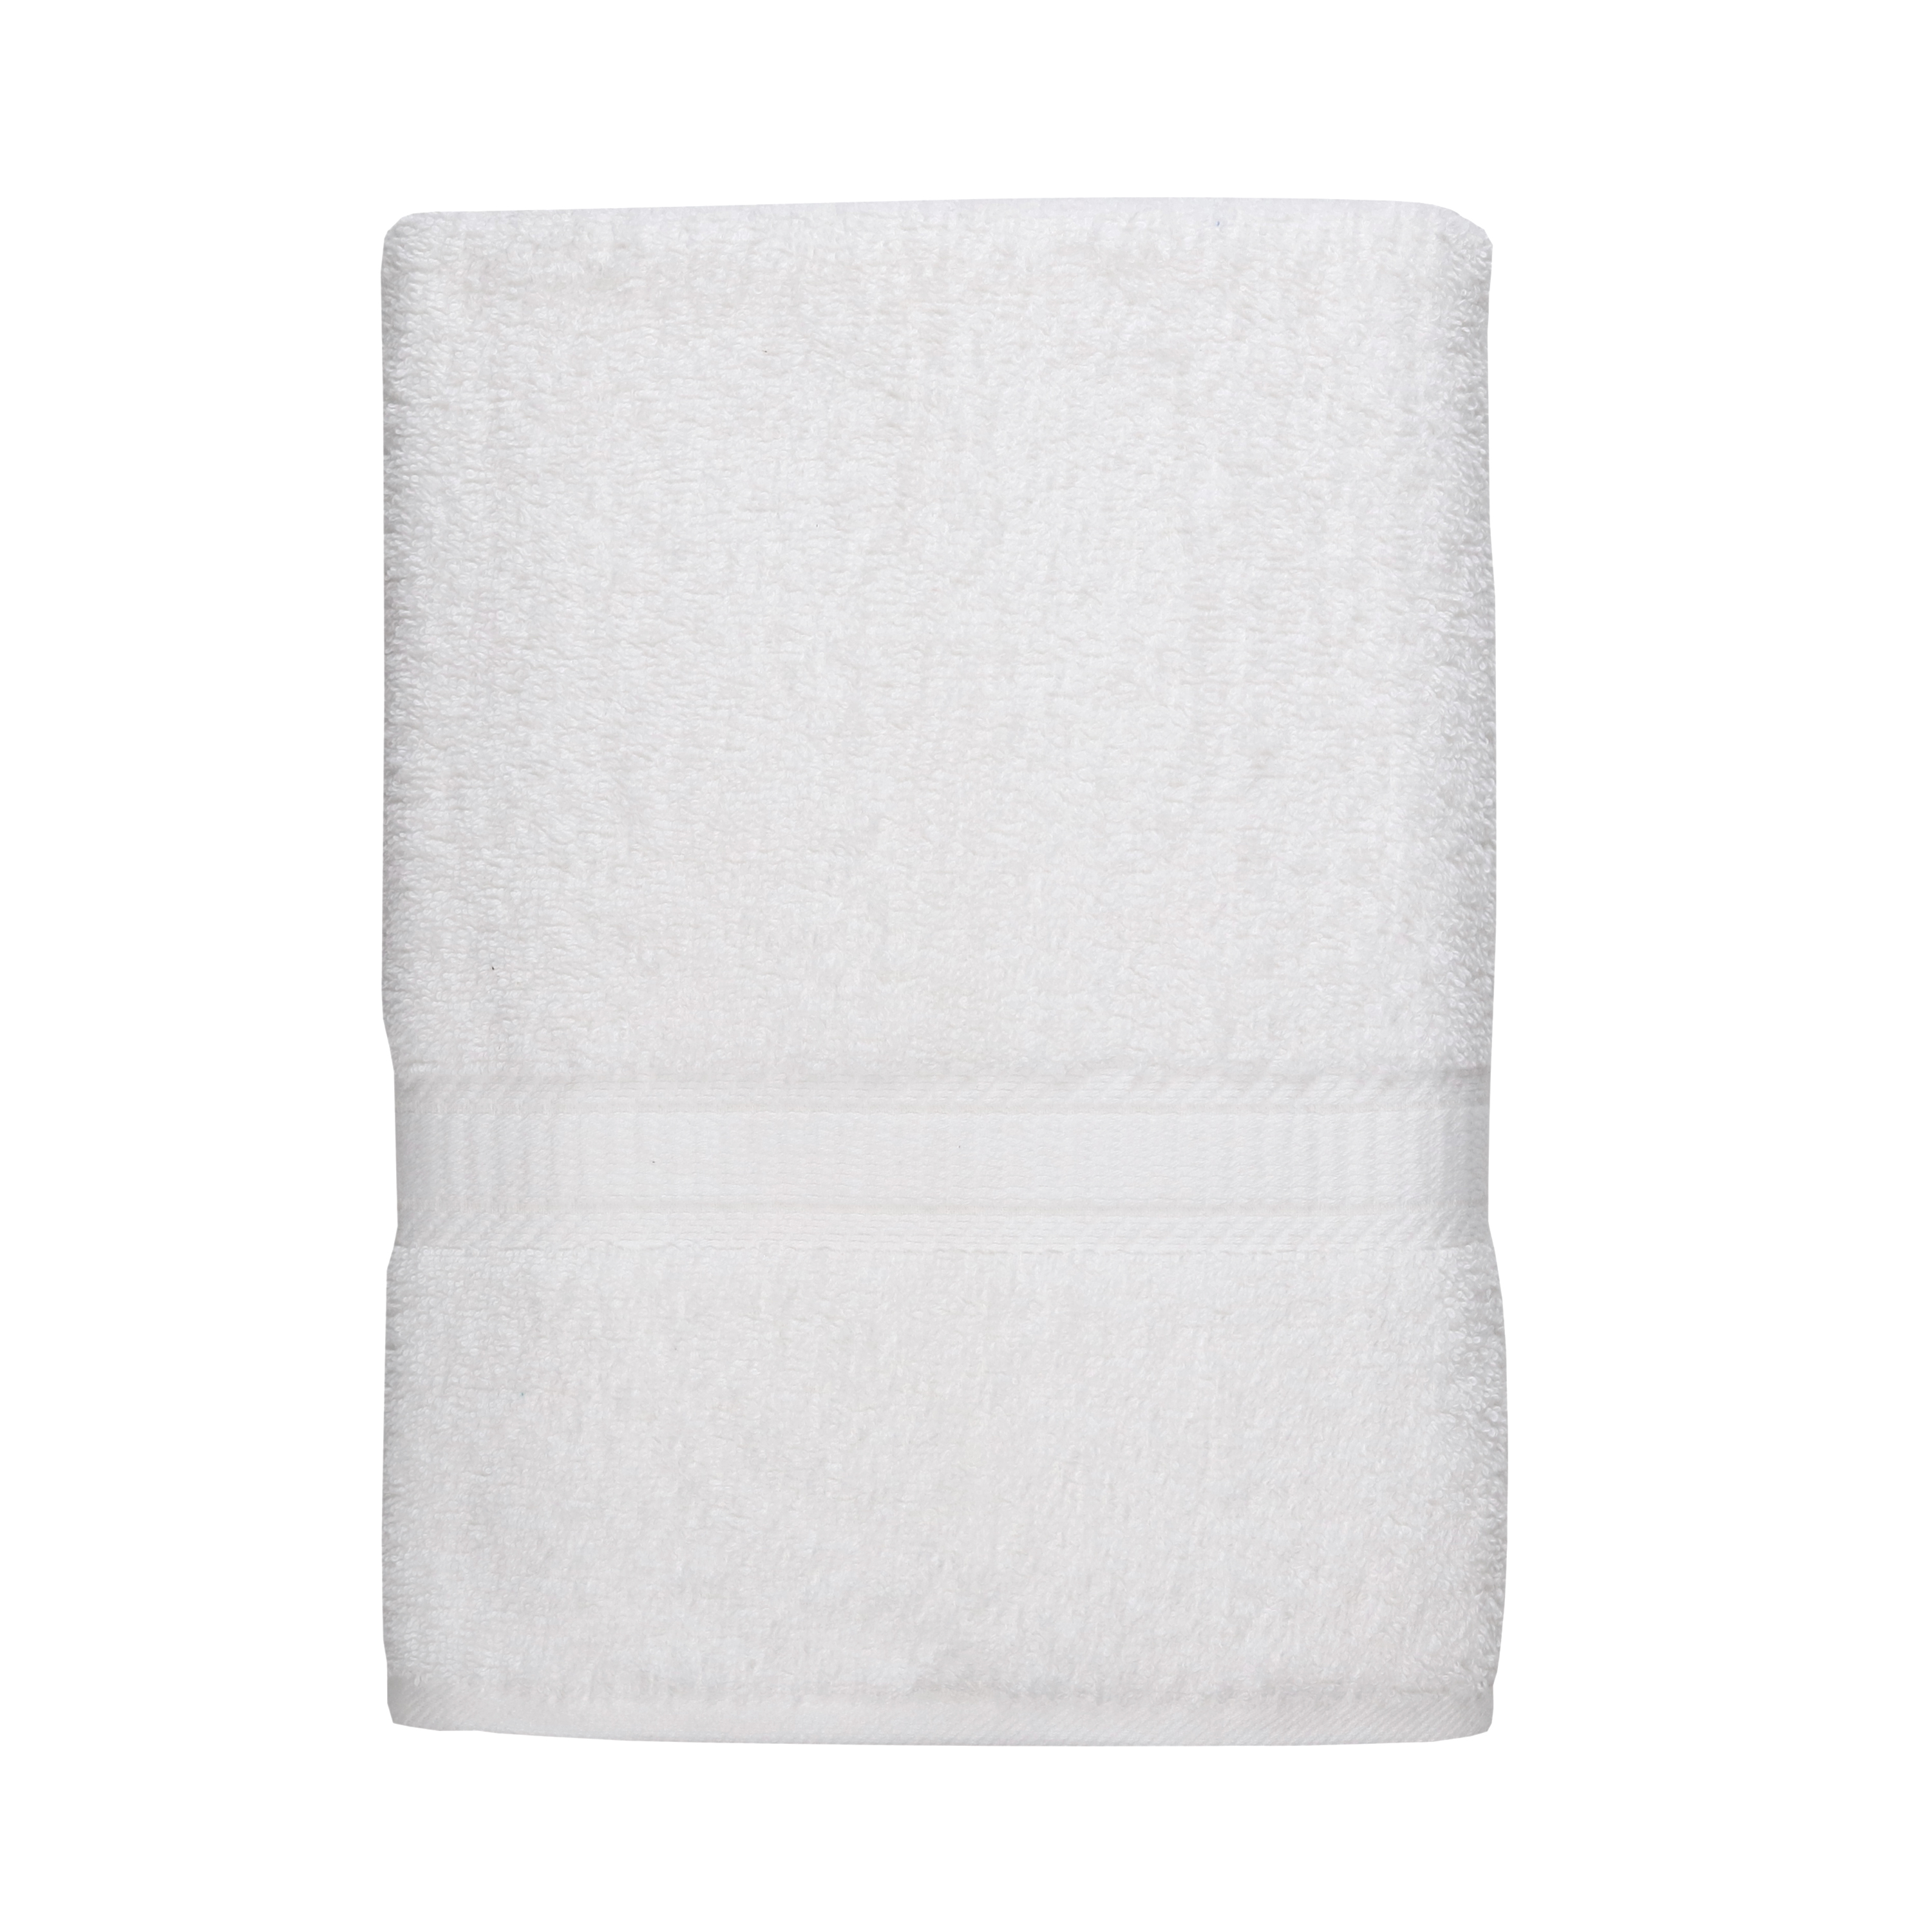 Mainstays Basic Solid Bath Towel, White - Walmart.com $1.75